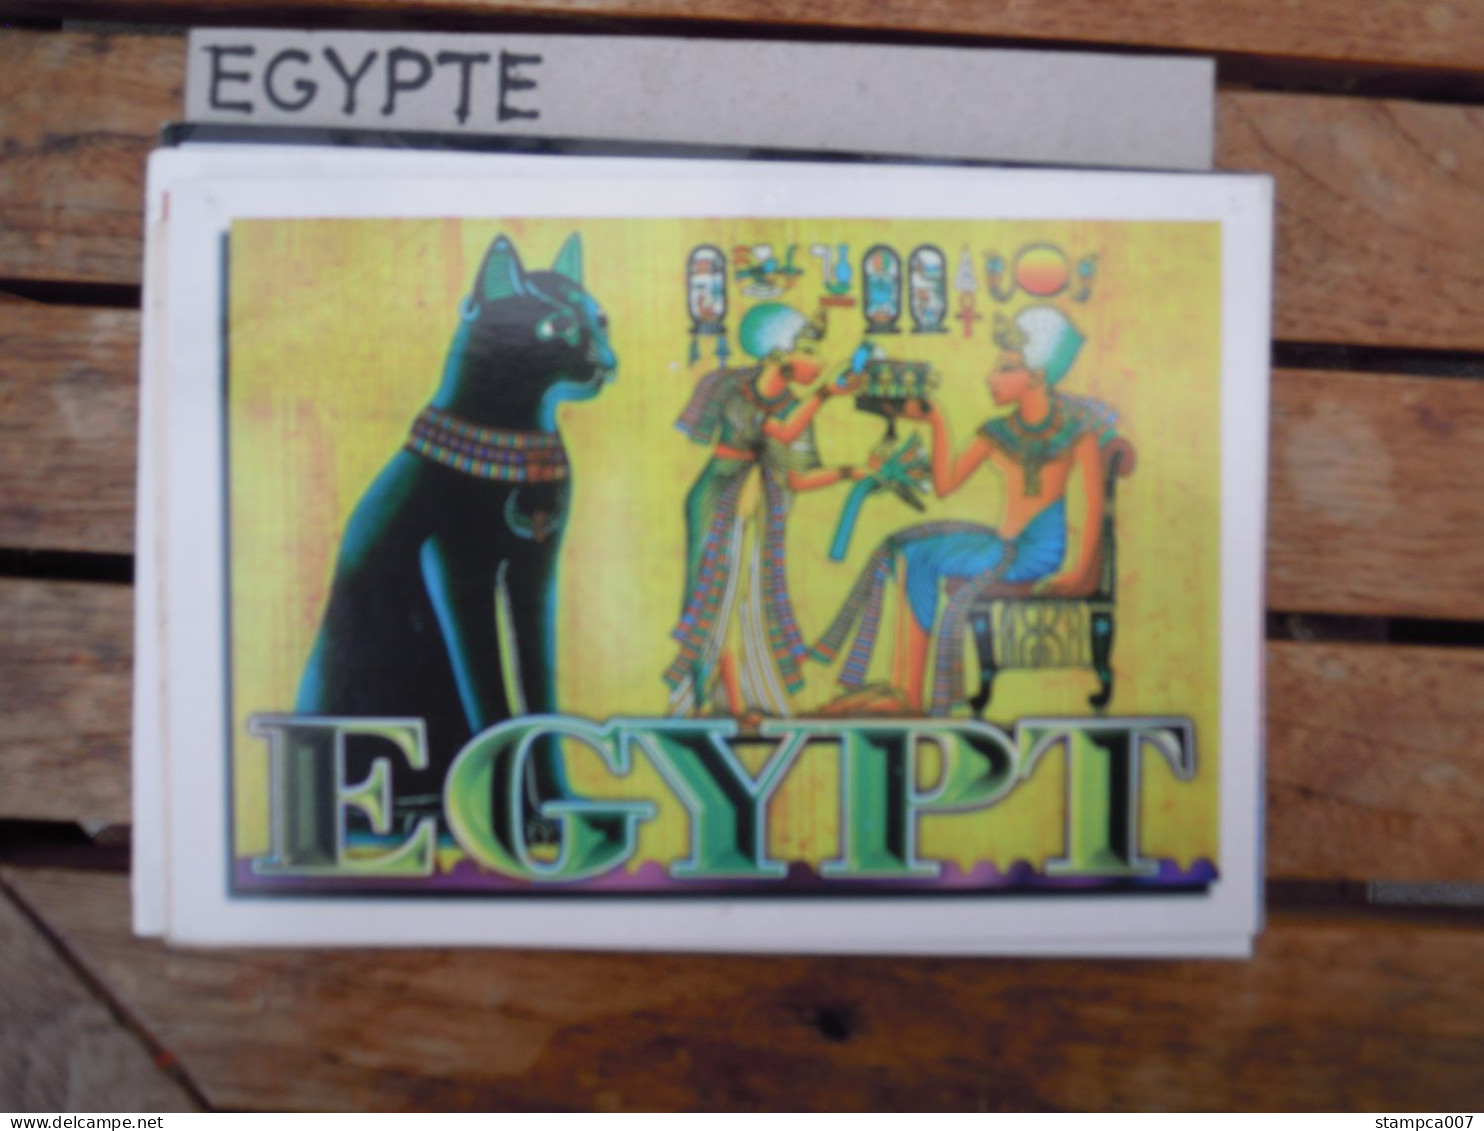 Egypt - Tut Ankamen Cat Chat Kat - Sphinx